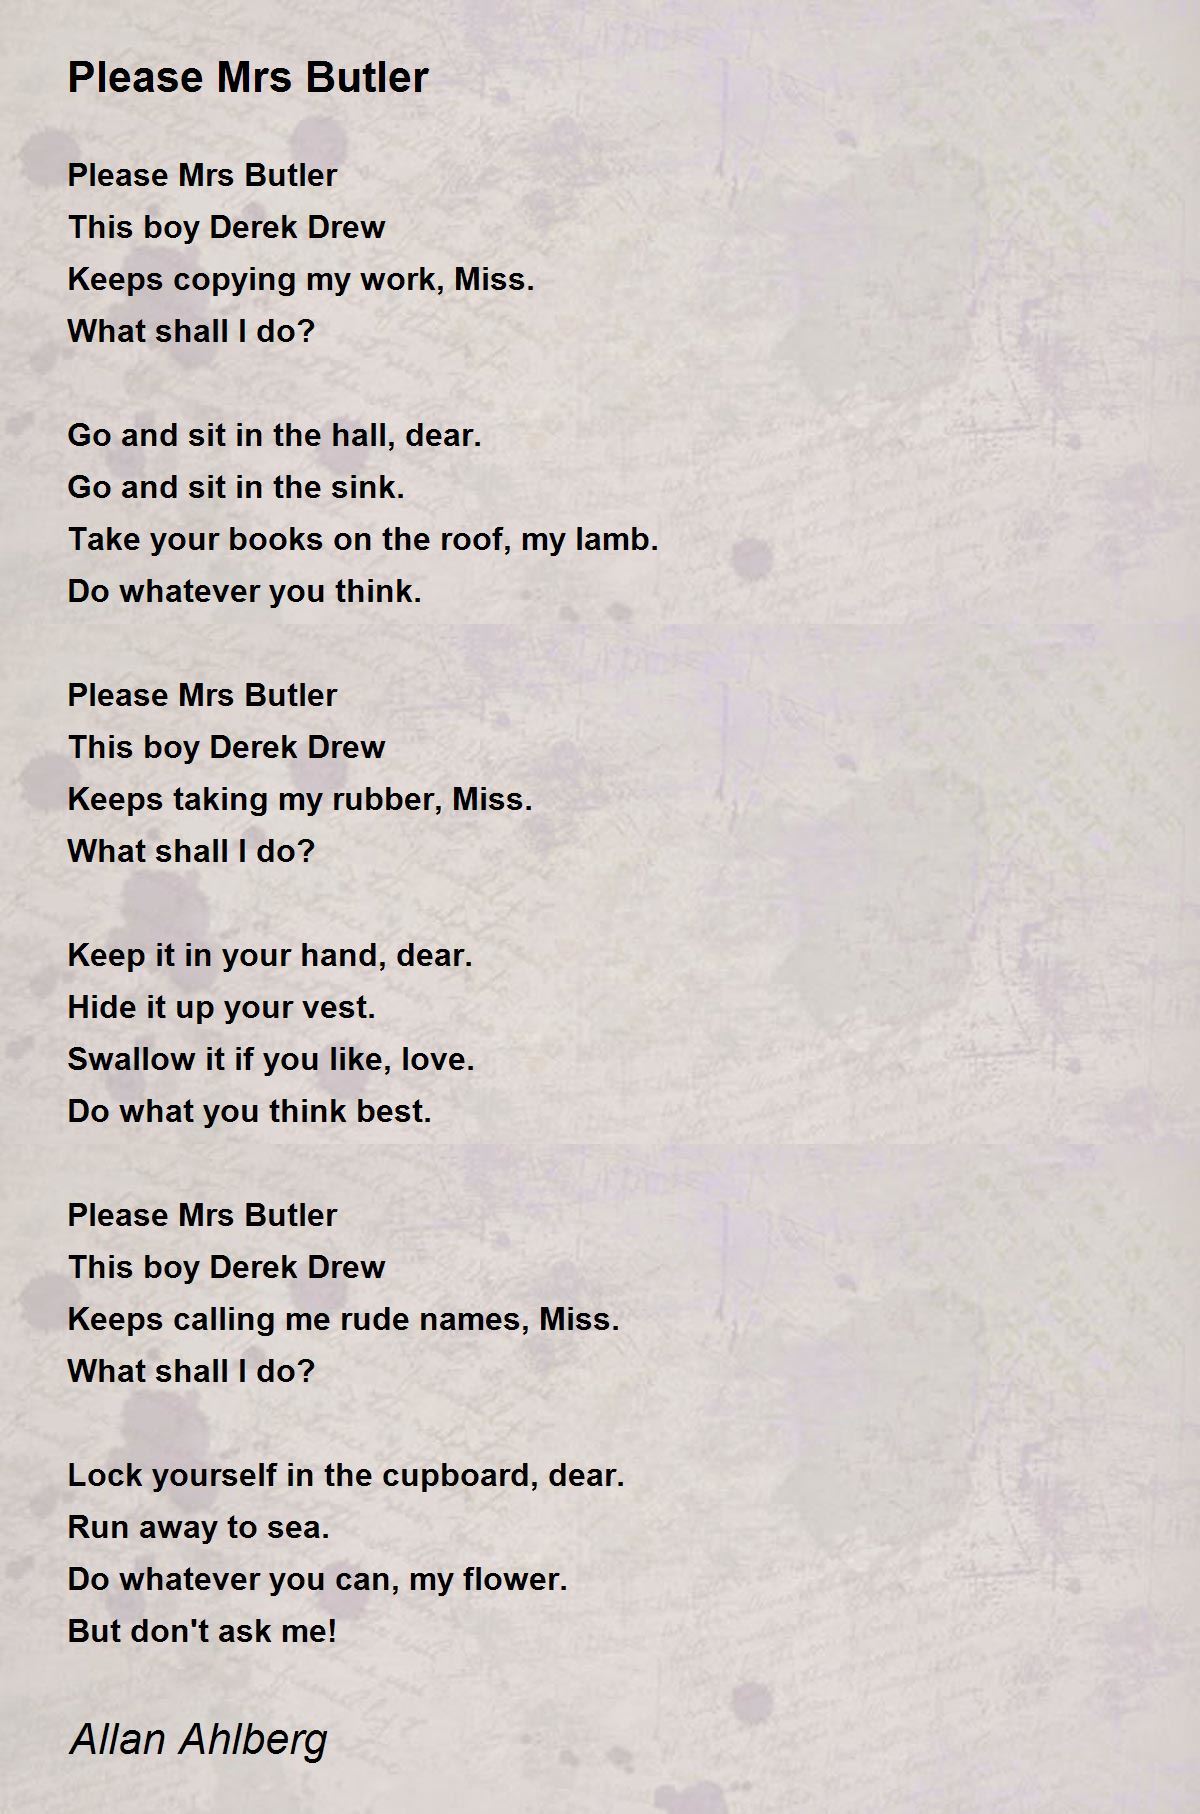 Please Mrs Butler - Please Mrs Butler Poem by Allan Ahlberg